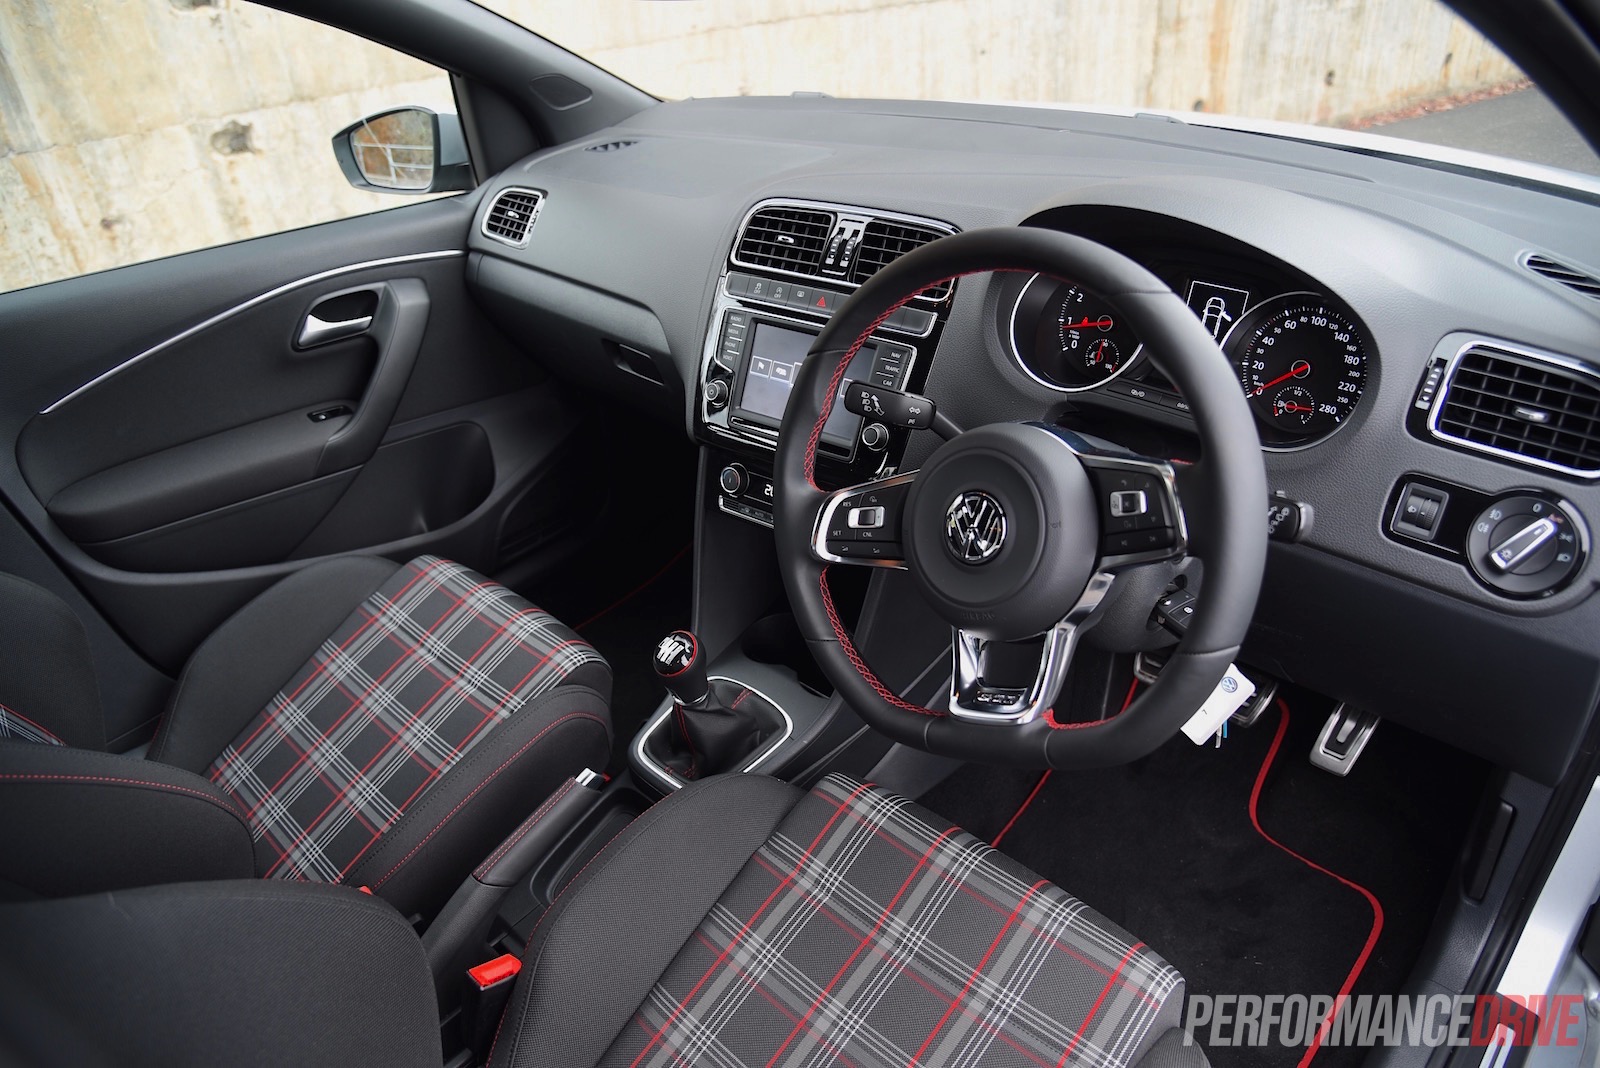 Volk Wagon Volkswagen Polo Gti Interior